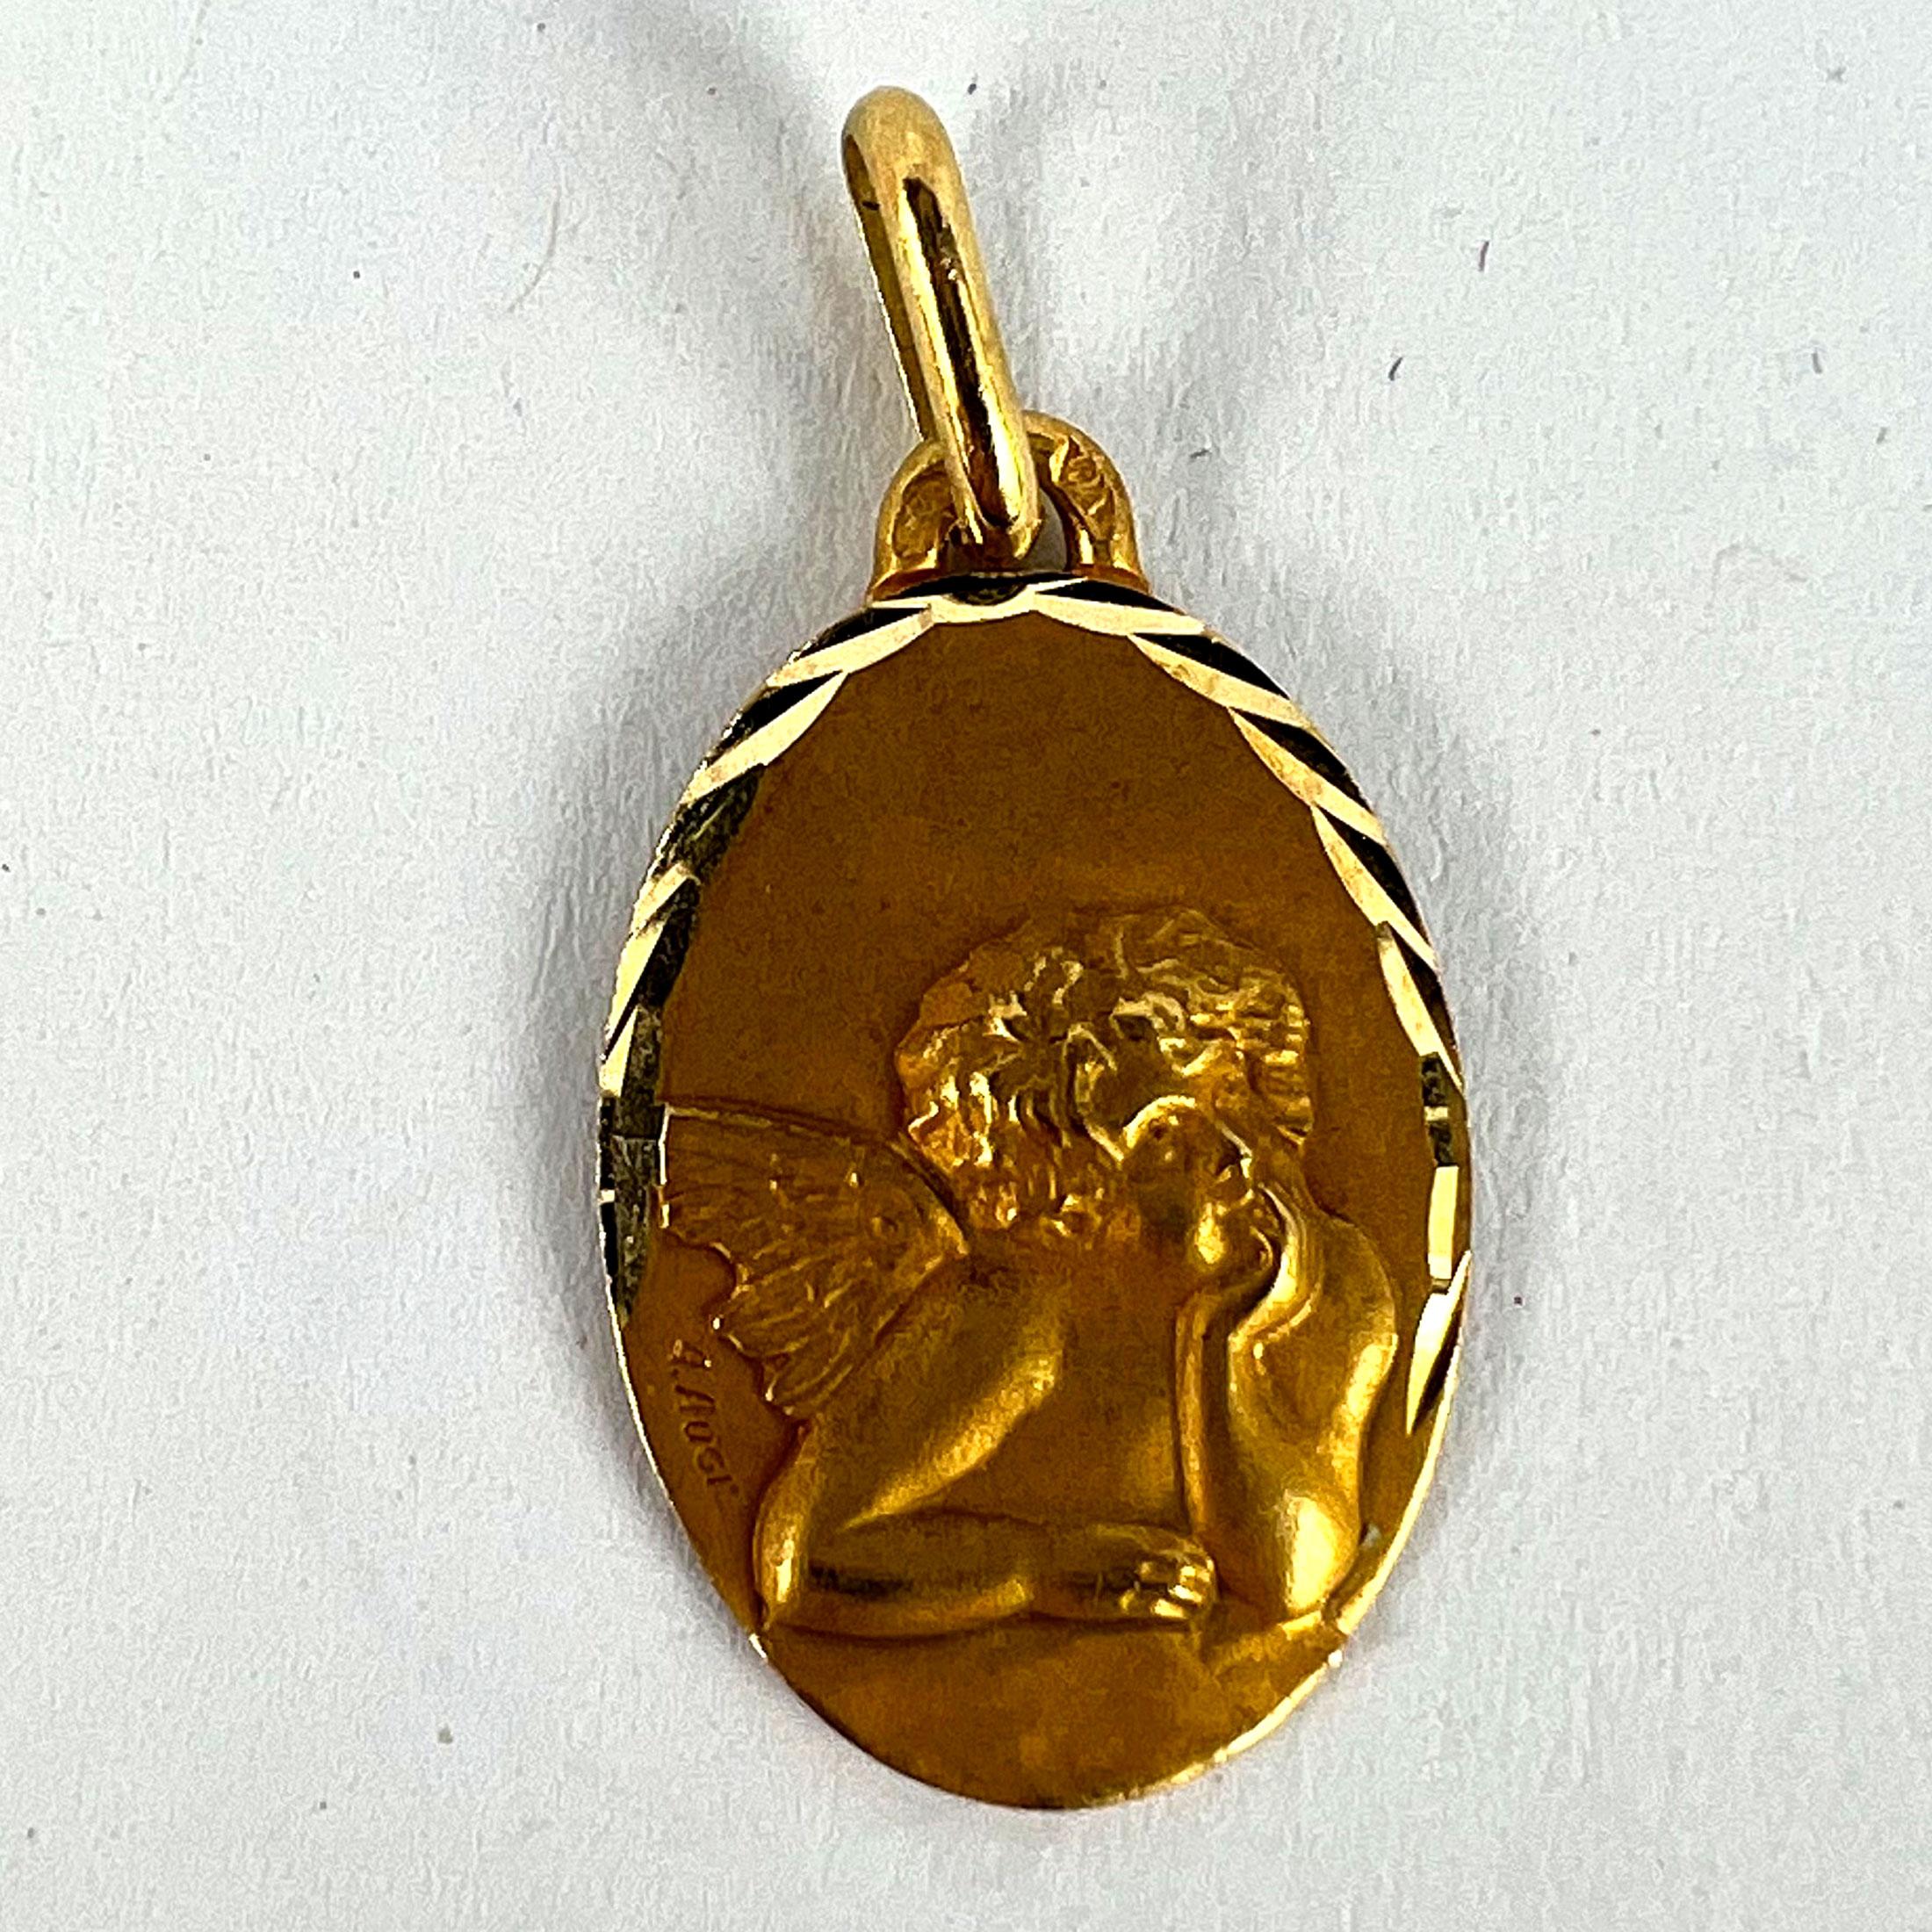 French Augis Raphael’s Cherub 18K Yellow Gold Charm Pendant For Sale 7